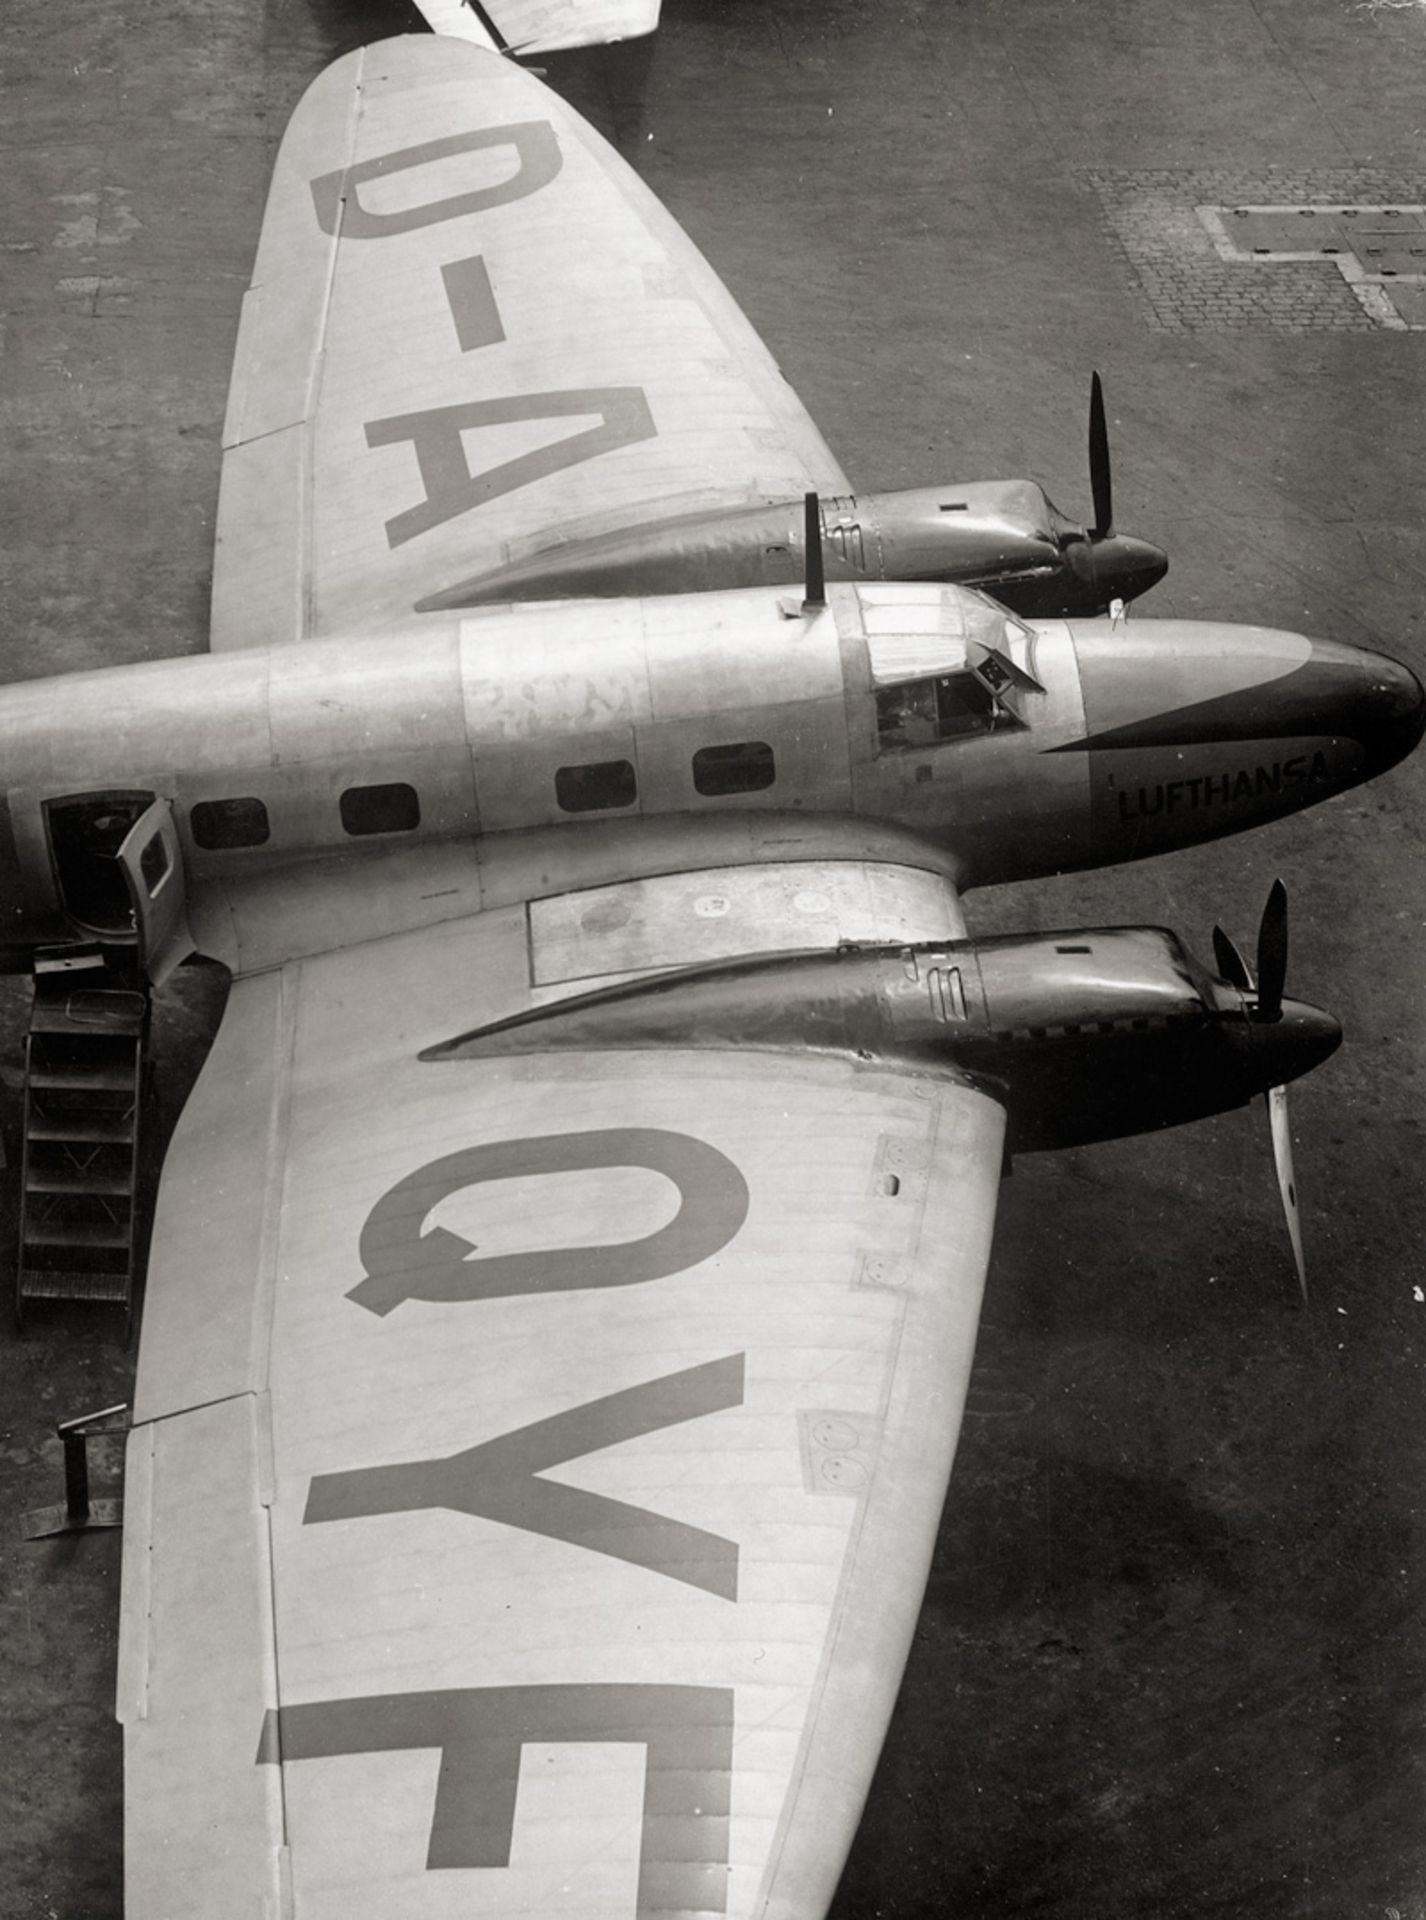 Stöcker, Alex: Heinkel He 111 plane and Fokker plane at Tempelhof airpo...